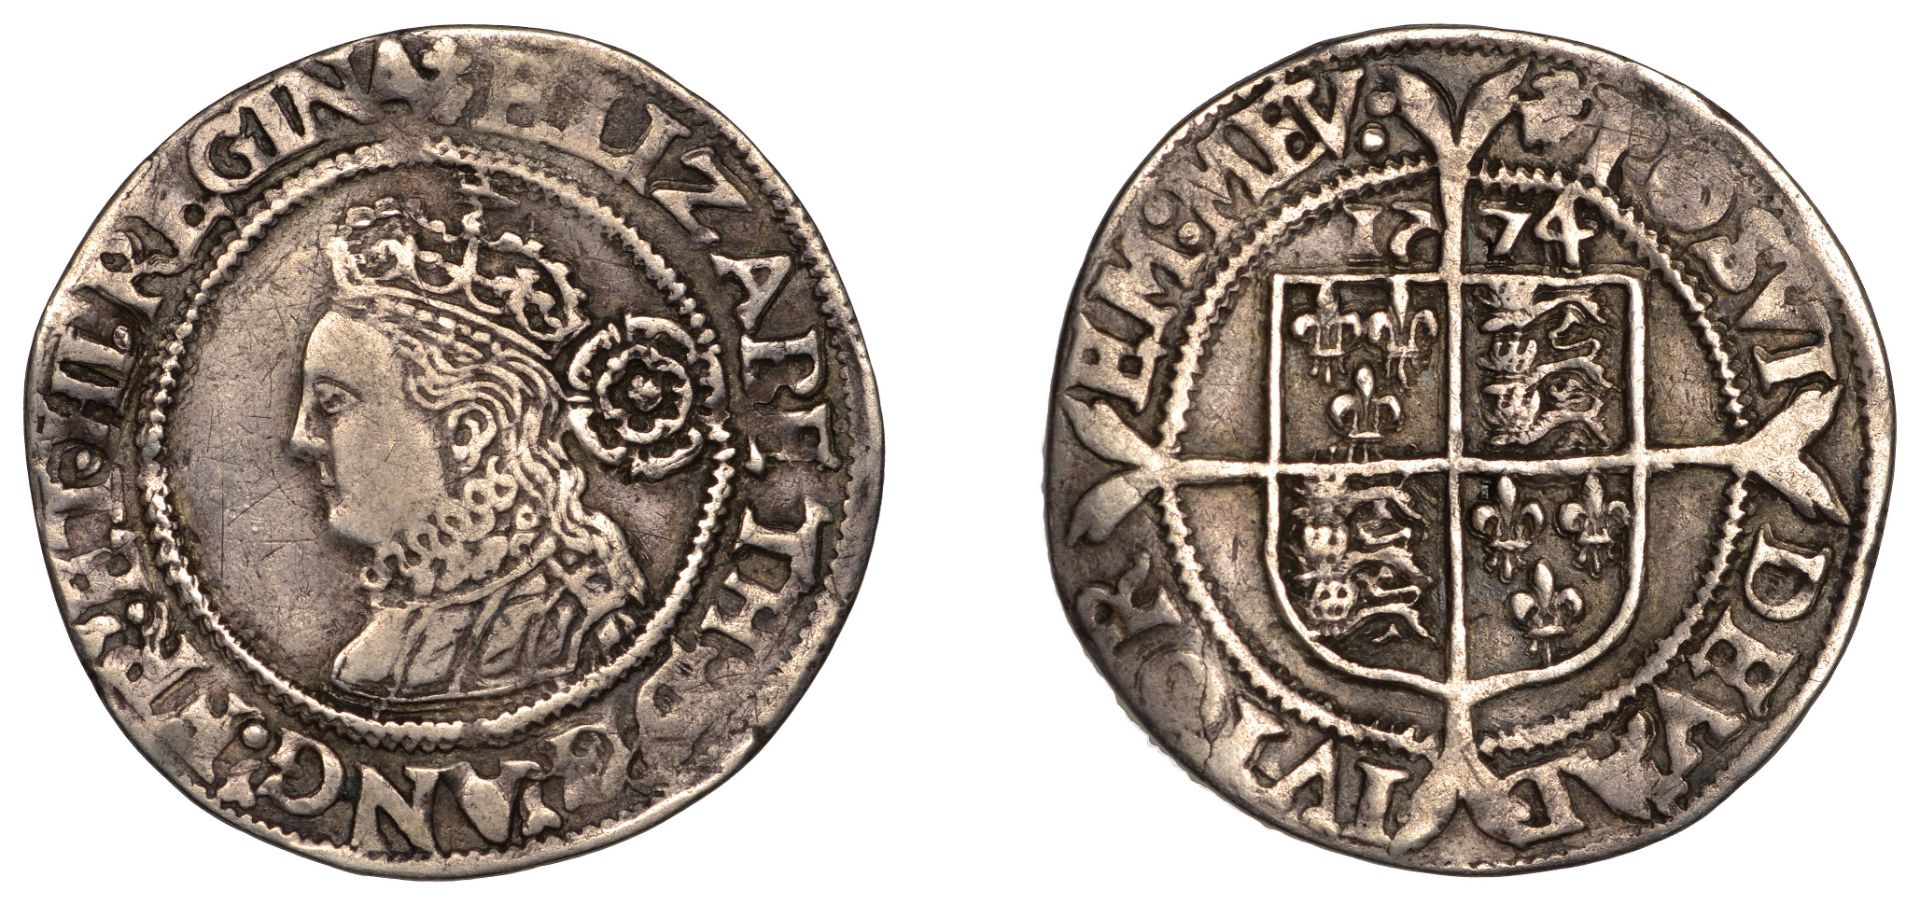 Elizabeth I (1558-1603), A contemporary imitation of a Sixpence, 1574, mm. ermine, reads eli...